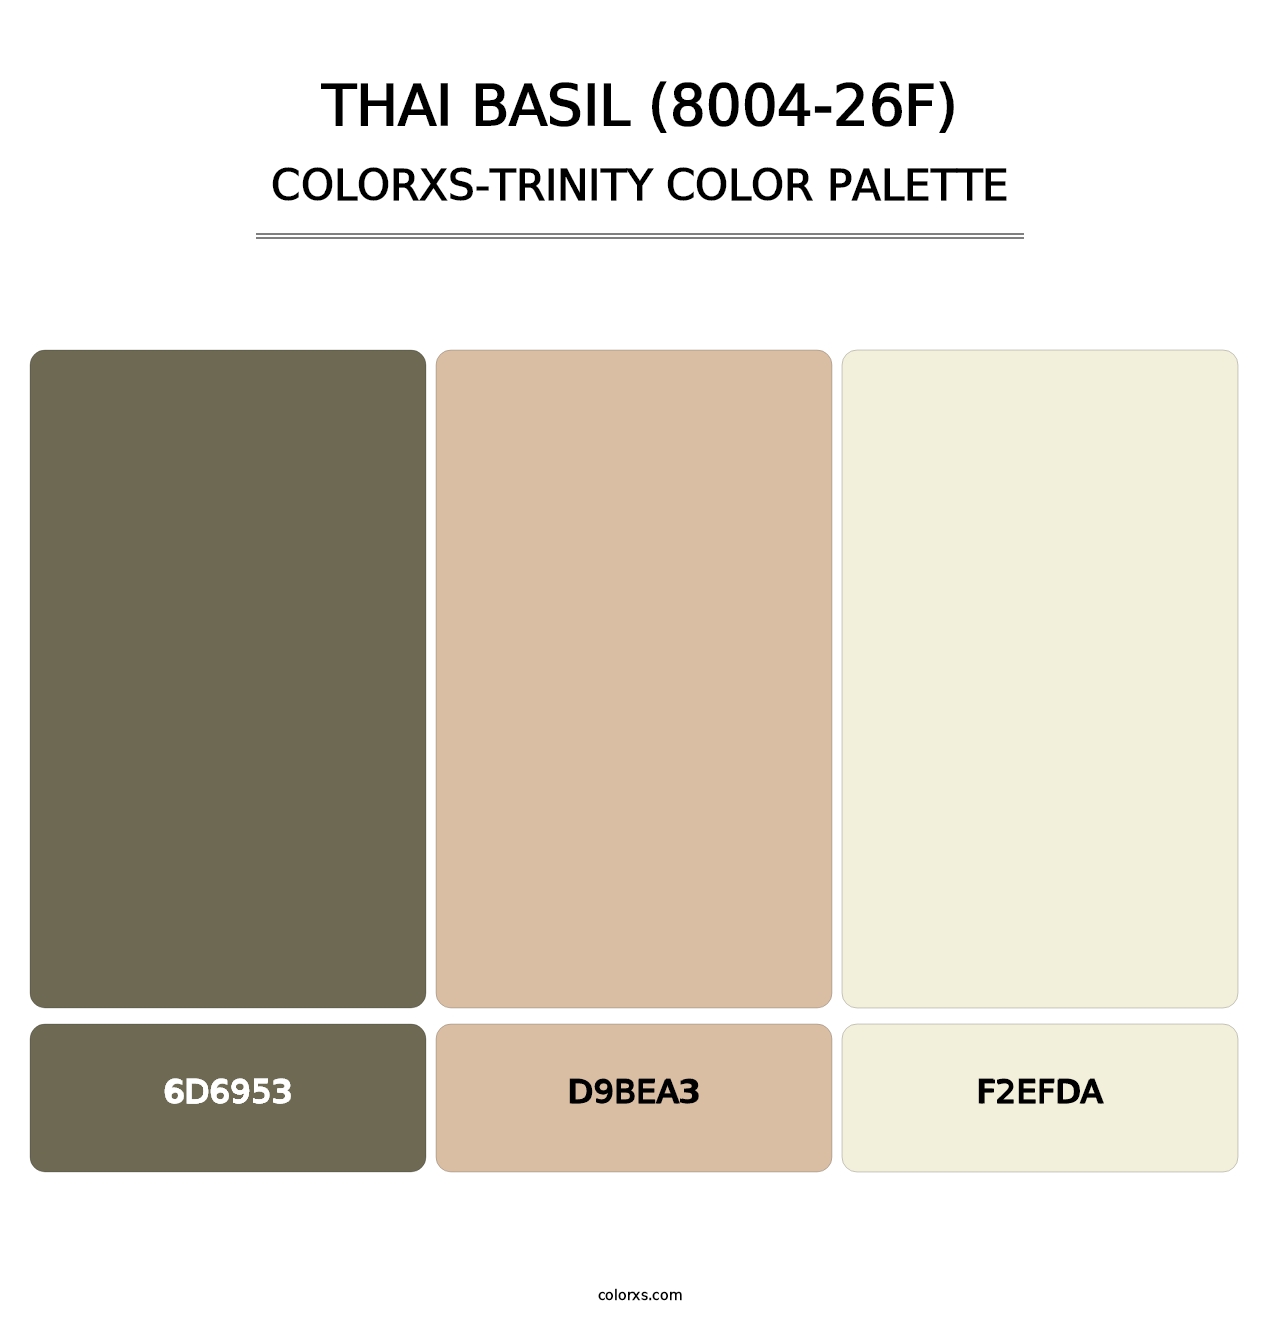 Thai Basil (8004-26F) - Colorxs Trinity Palette